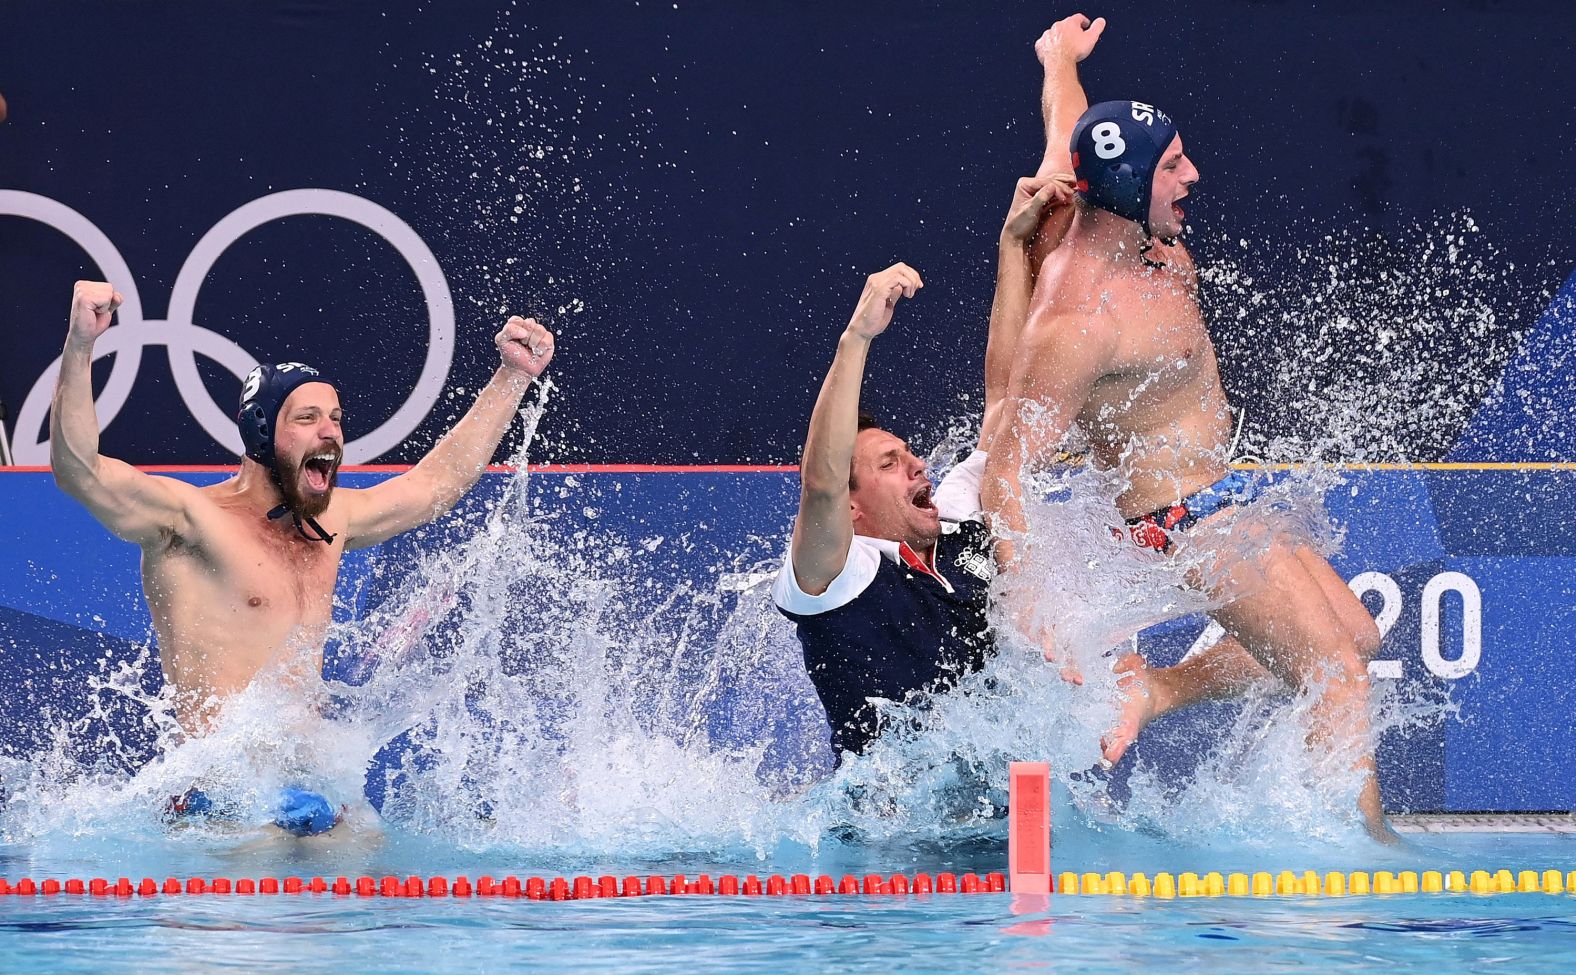 Serbia's Nikola Dedović, Vladimir Vujasinović and Milan Aleksić jump into the pool as they celebrate winning <a href="index.php?page=&url=https%3A%2F%2Fwww.cnn.com%2Fworld%2Flive-news%2Ftokyo-2020-olympics-08-08-21-spt%2Fh_a15625c29c75324d0b2fcf55f37f79ac" target="_blank">the water polo final against Greece </a>on August 8. Serbia won the match 13-10.